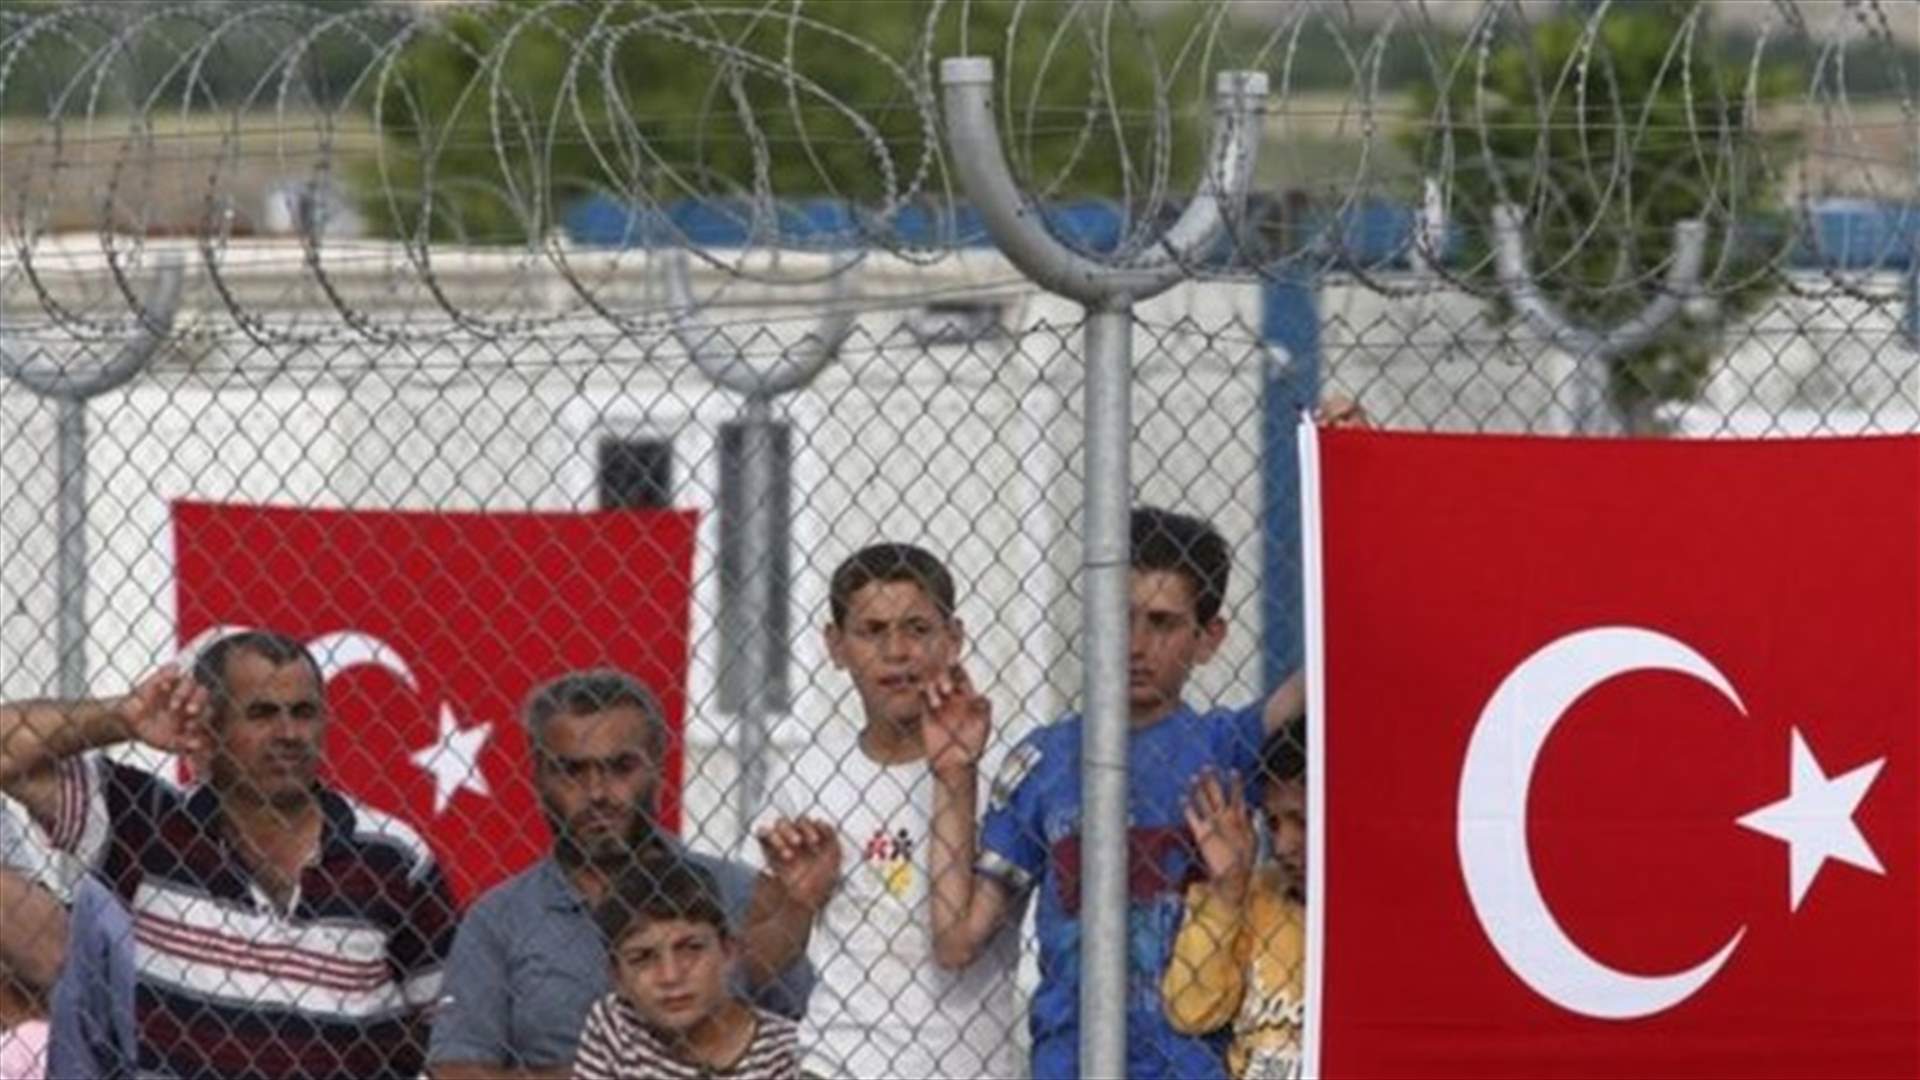 Merkel arrives in southeast Turkey to ease tensions of migrant deal